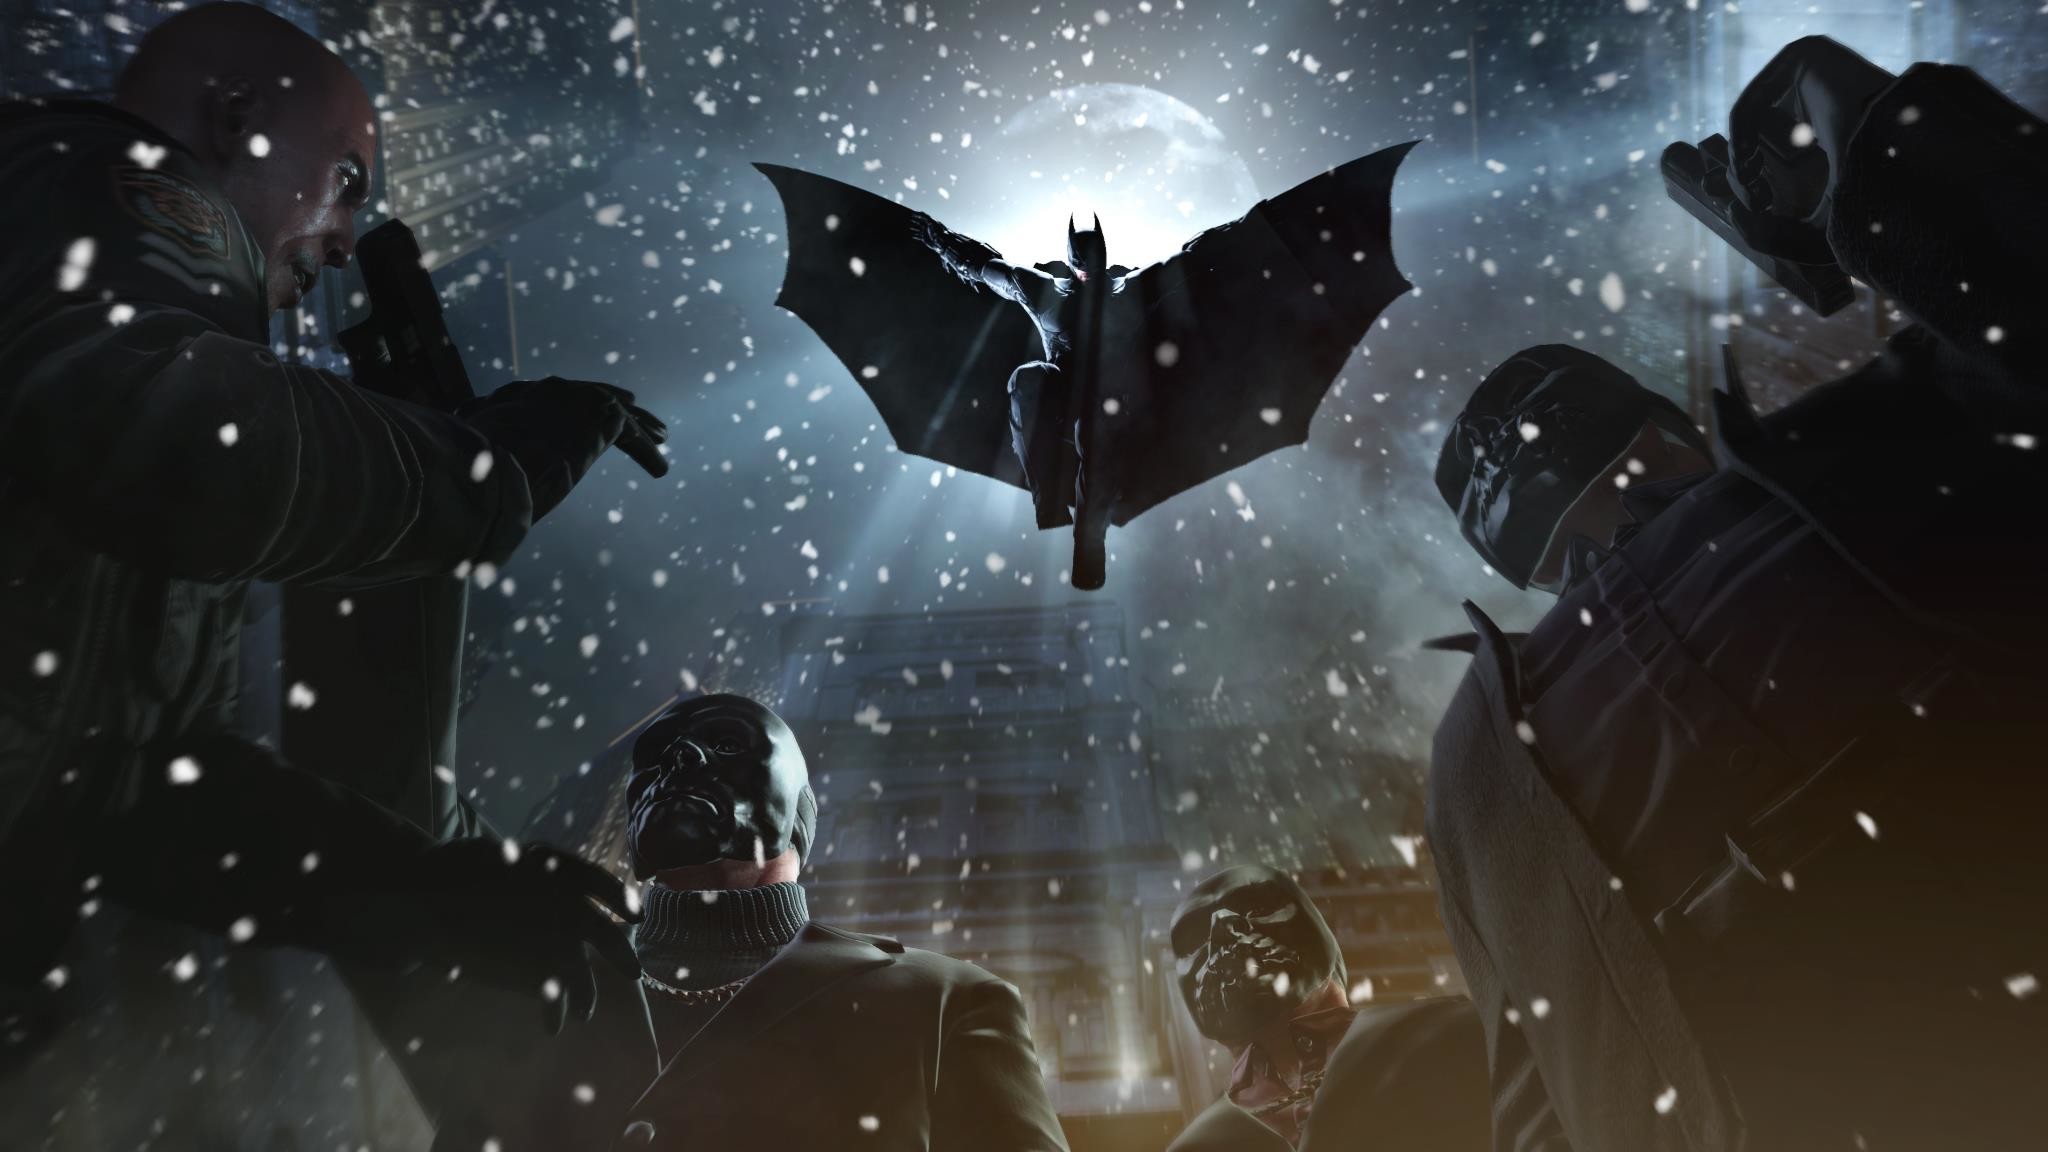 Batman Arkham Origins Wallpaper Full HD ID:313